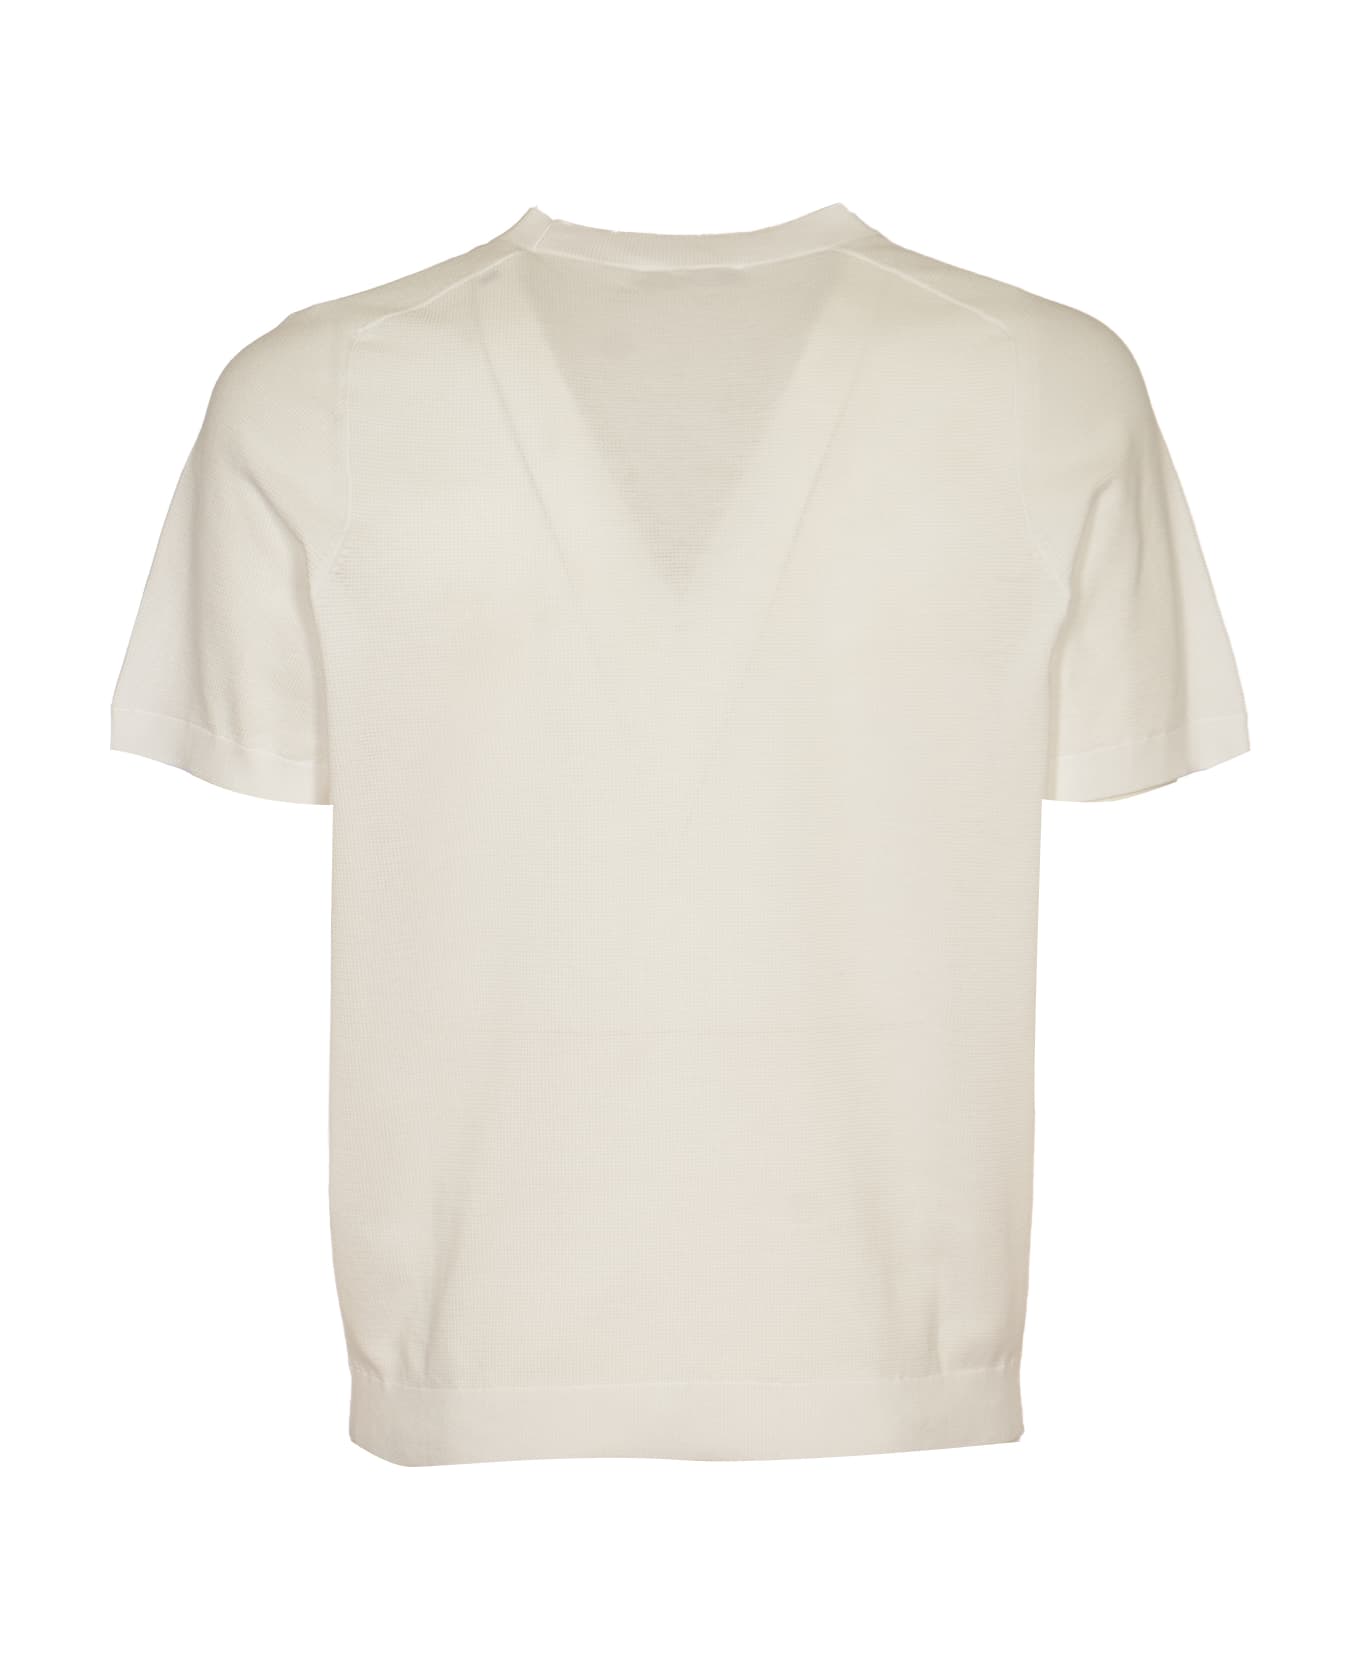 Kangra Round Neck T-shirt - White